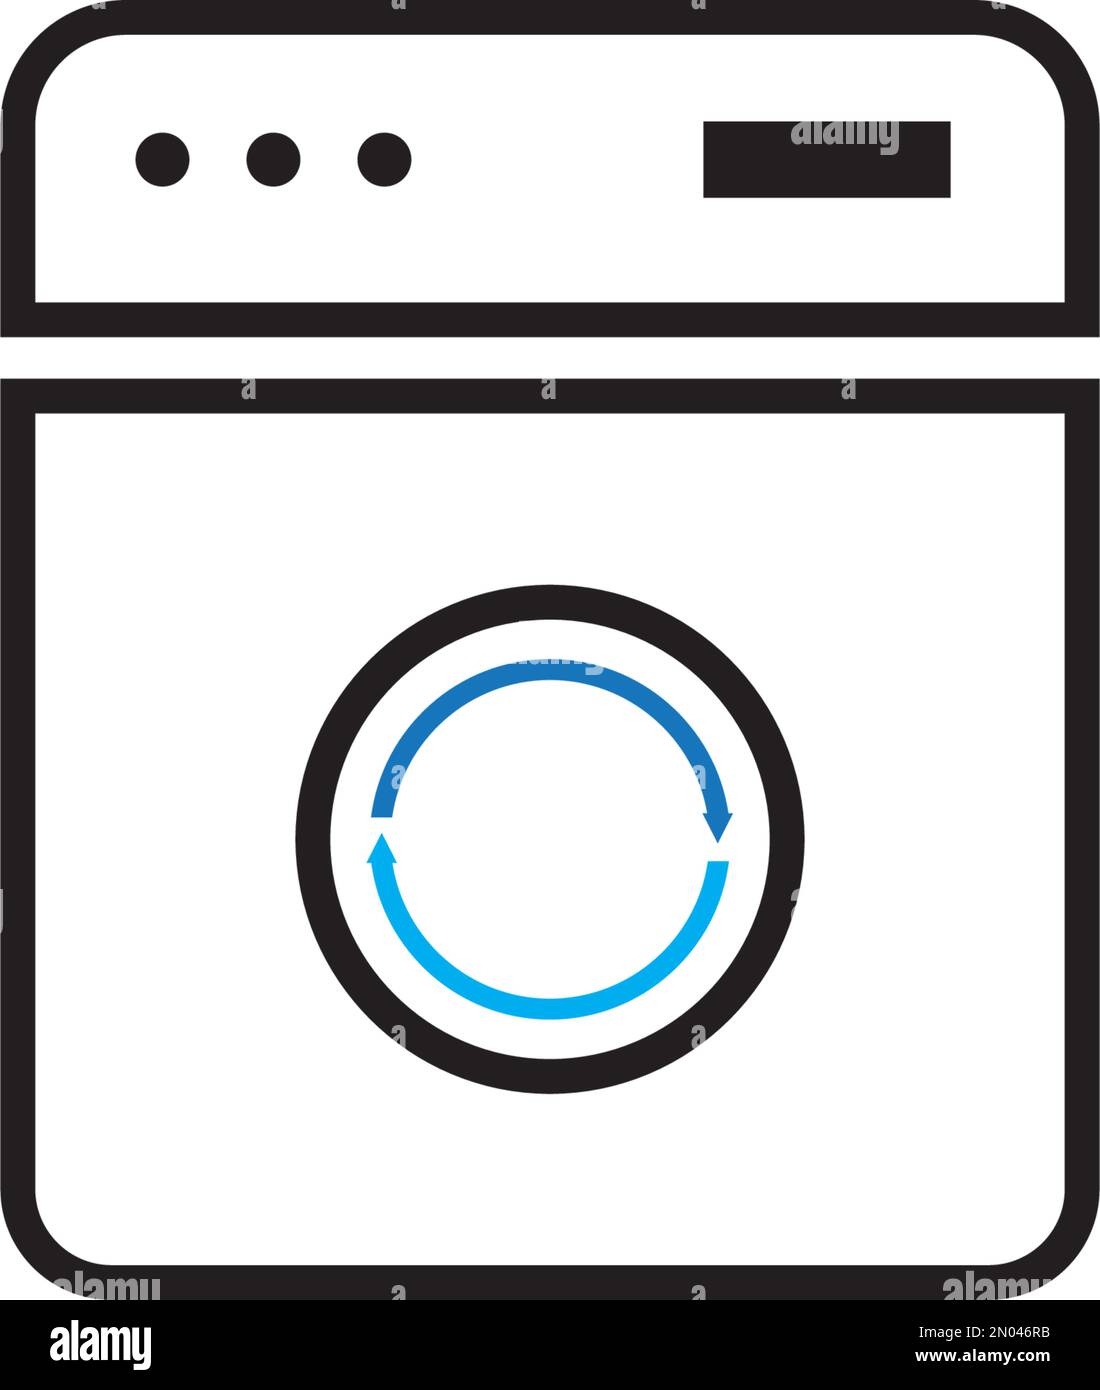 washing machine logo vector design illustration template Stock Vector